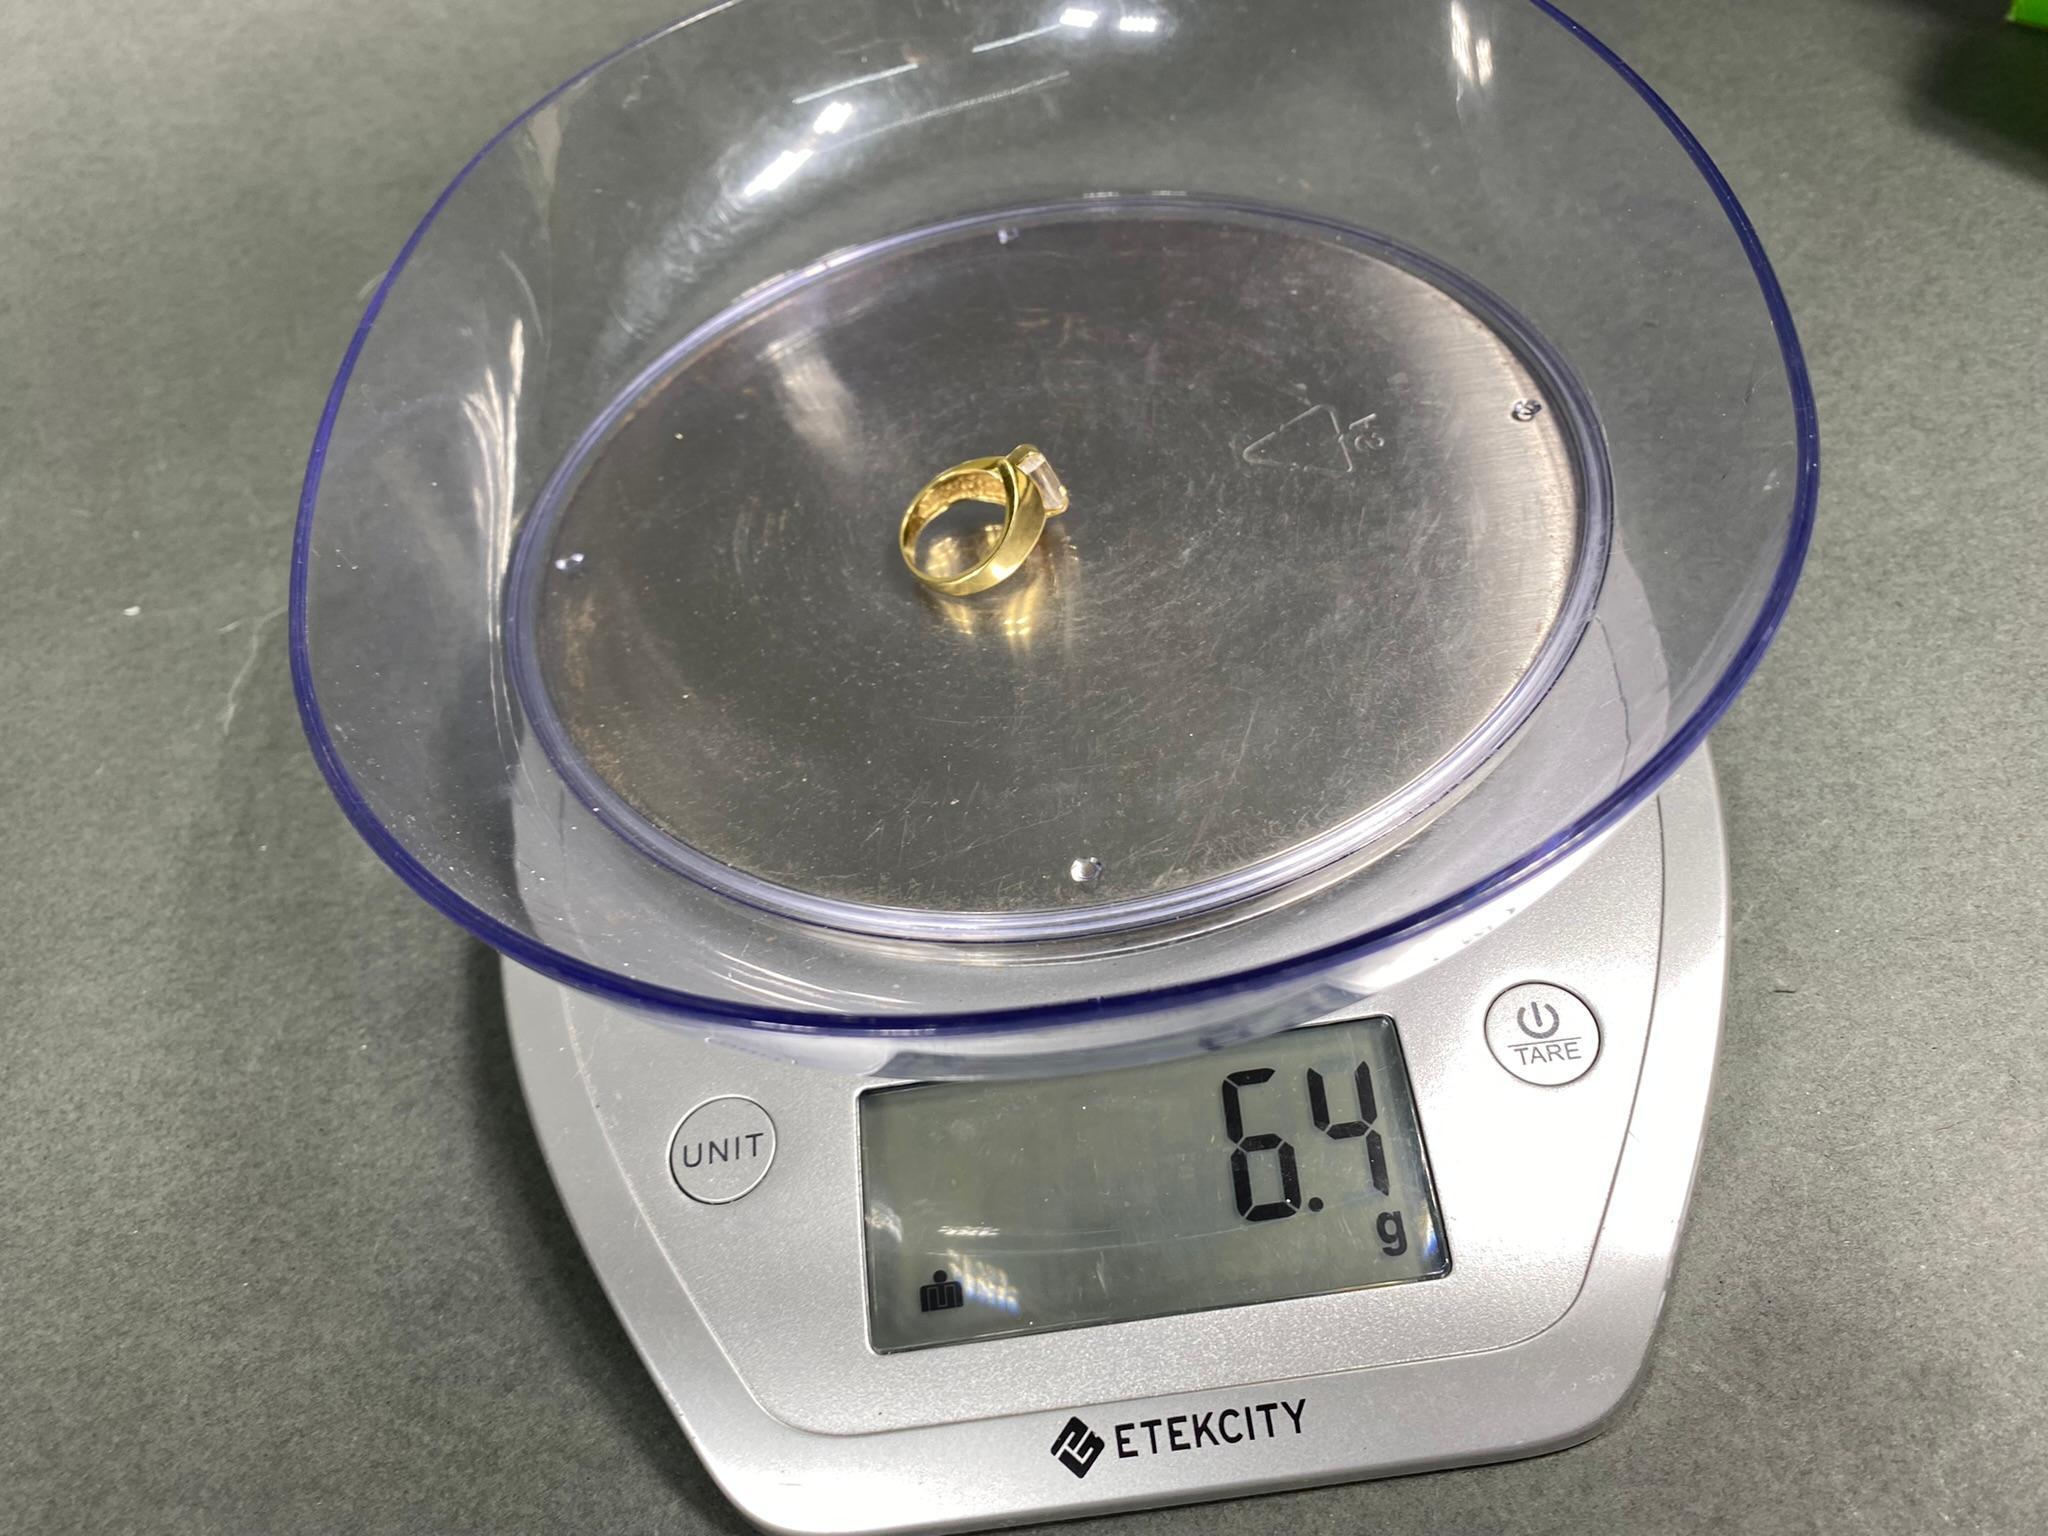 14k Gold & Sapphire Gemstone Ring 6.4 grams size 6.5